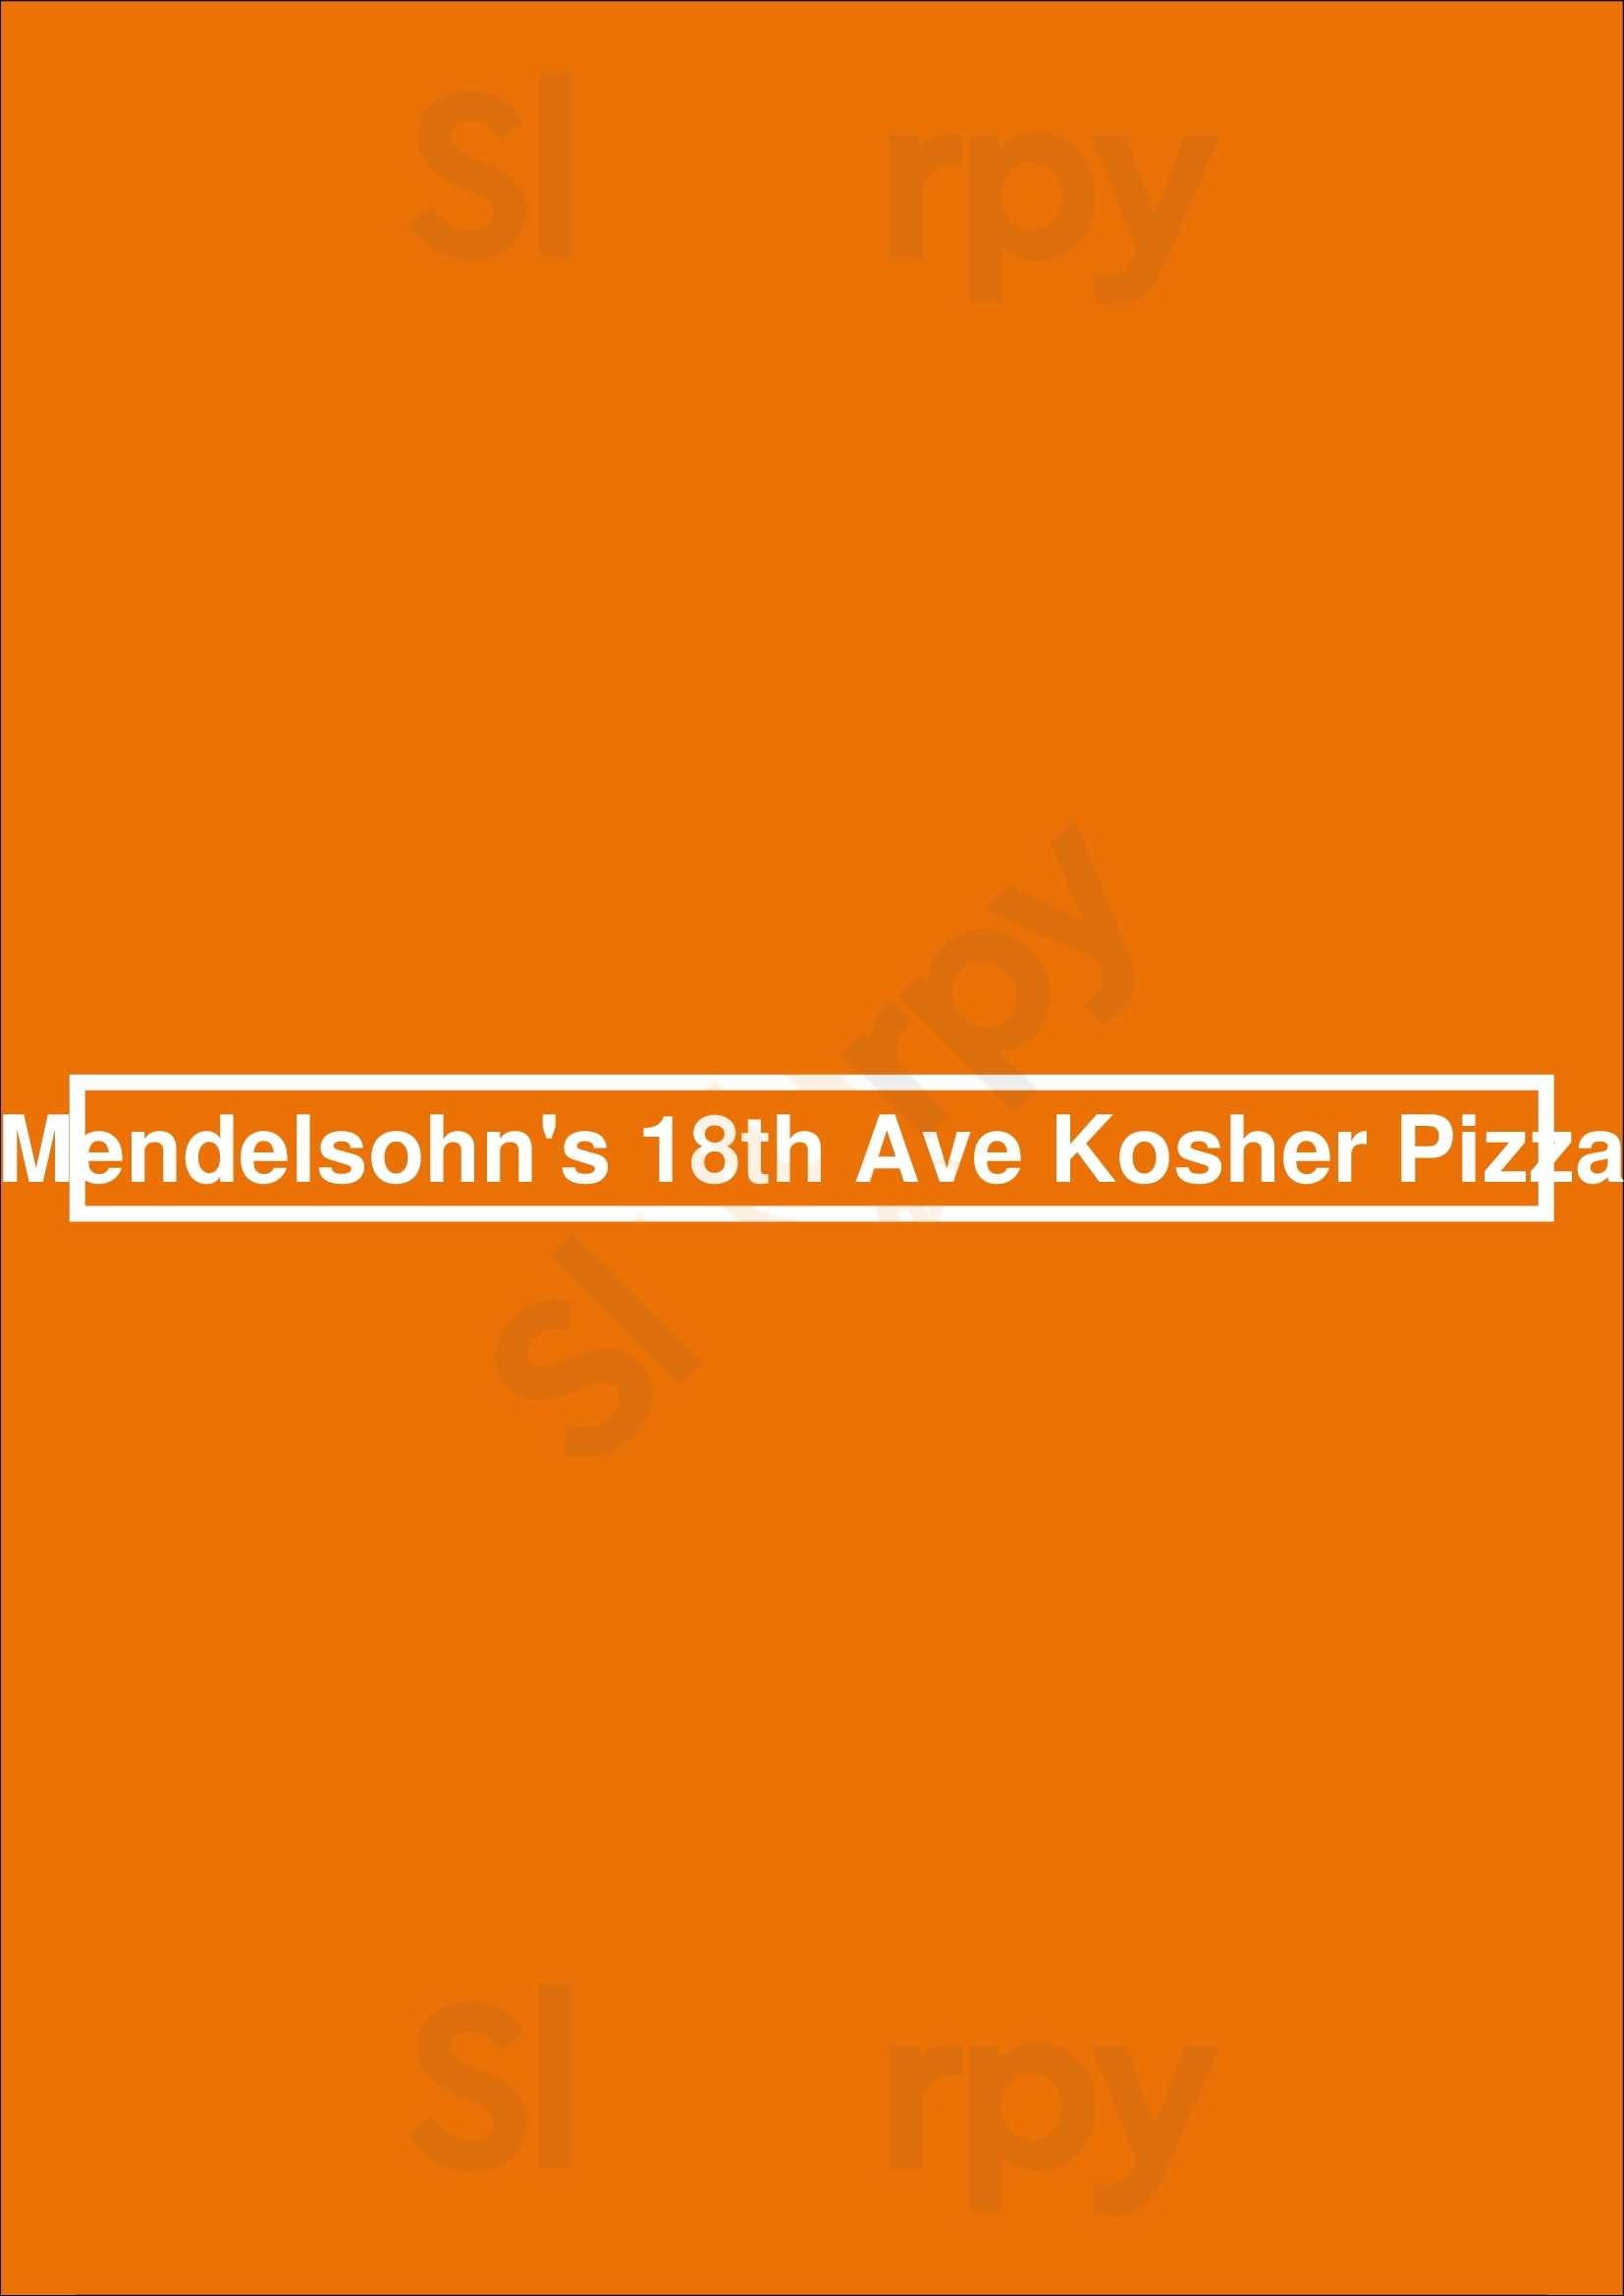 Mendelsohn's 18th Ave Kosher Pizza Brooklyn Menu - 1